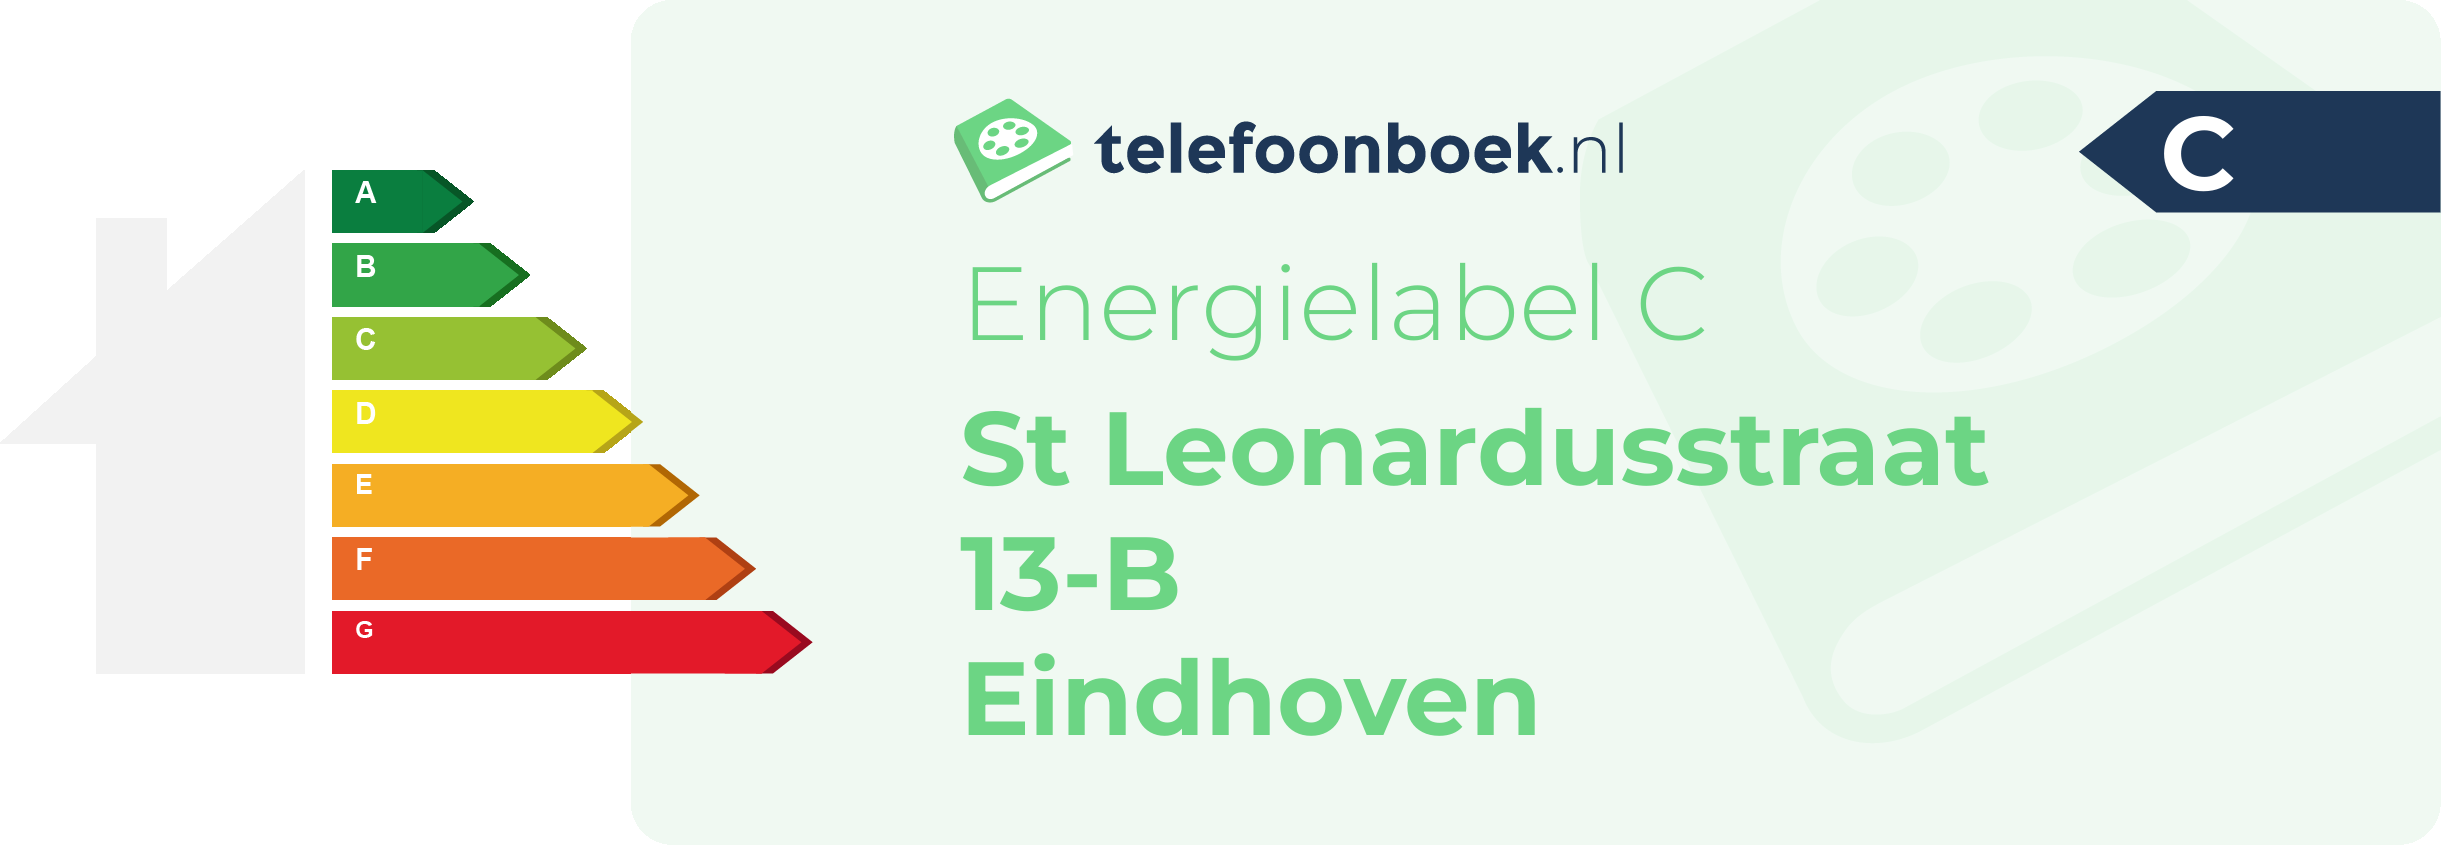 Energielabel St Leonardusstraat 13-B Eindhoven